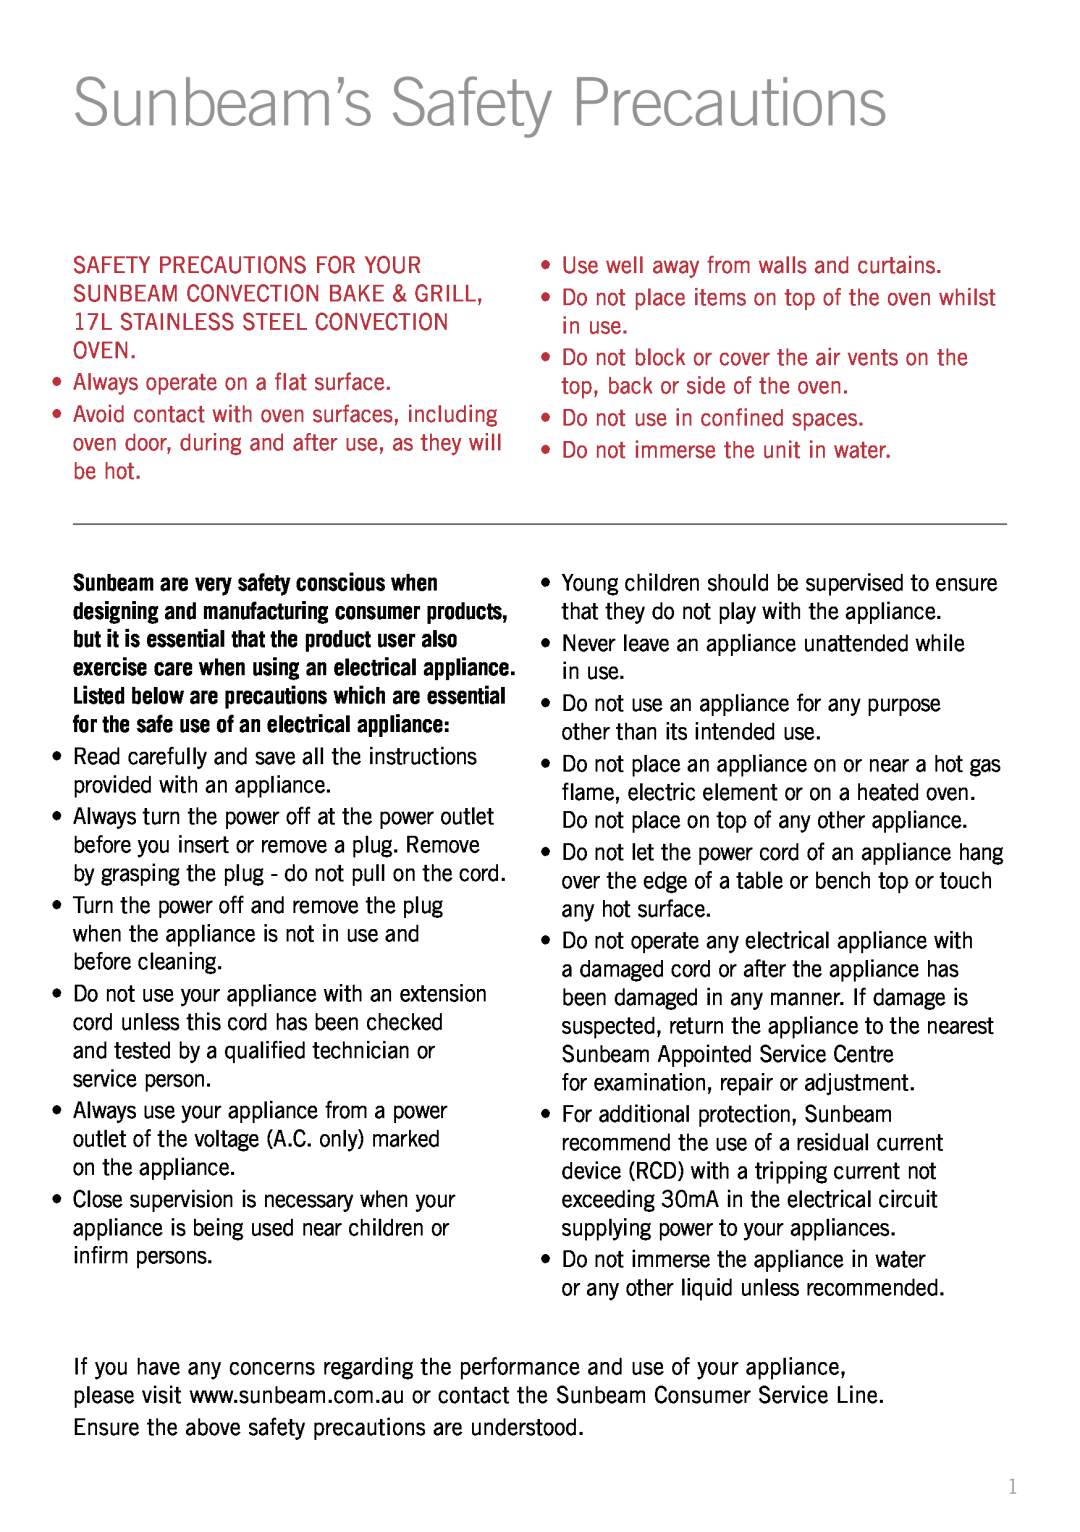 Sunbeam BT6700 manual Sunbeam’s Safety Precautions 